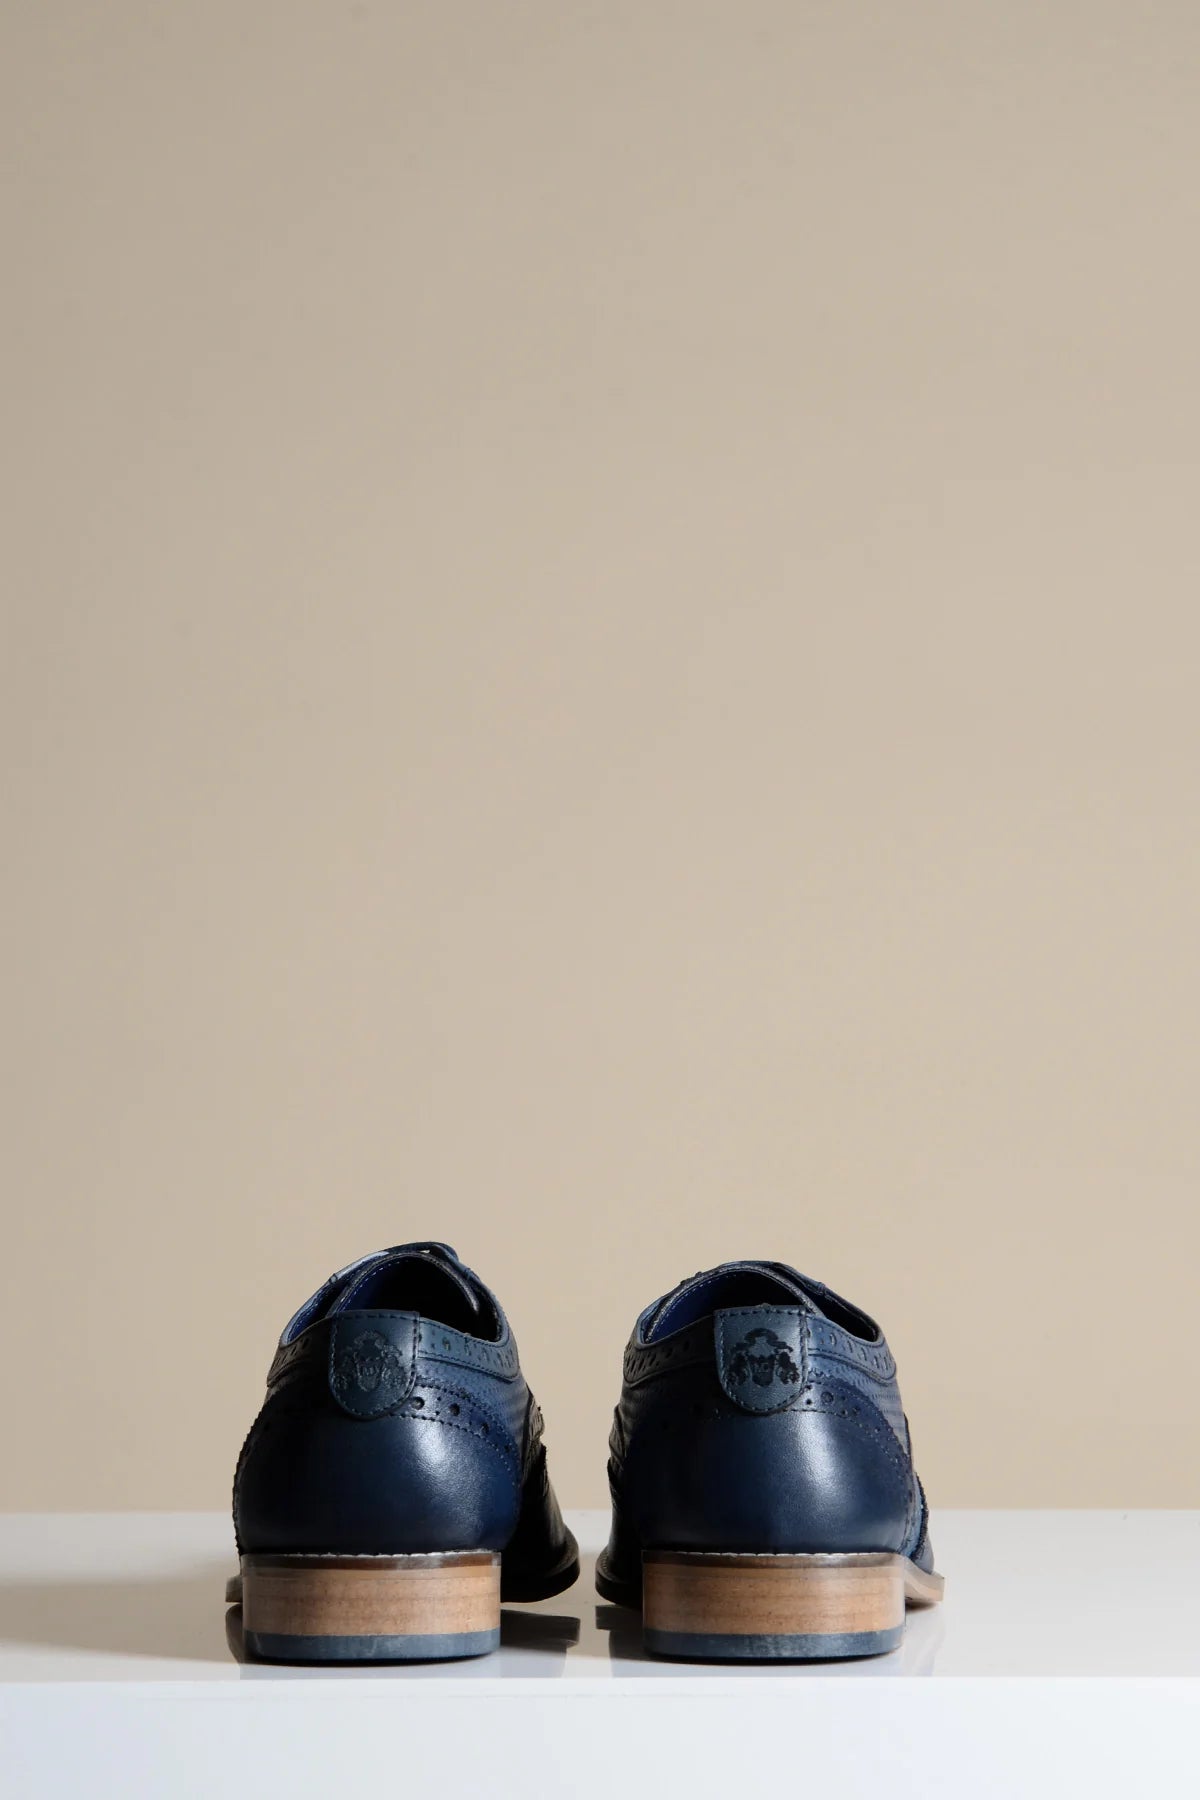 Navy leather shoes, Marc Darcy Brandon - Wingtip brogue